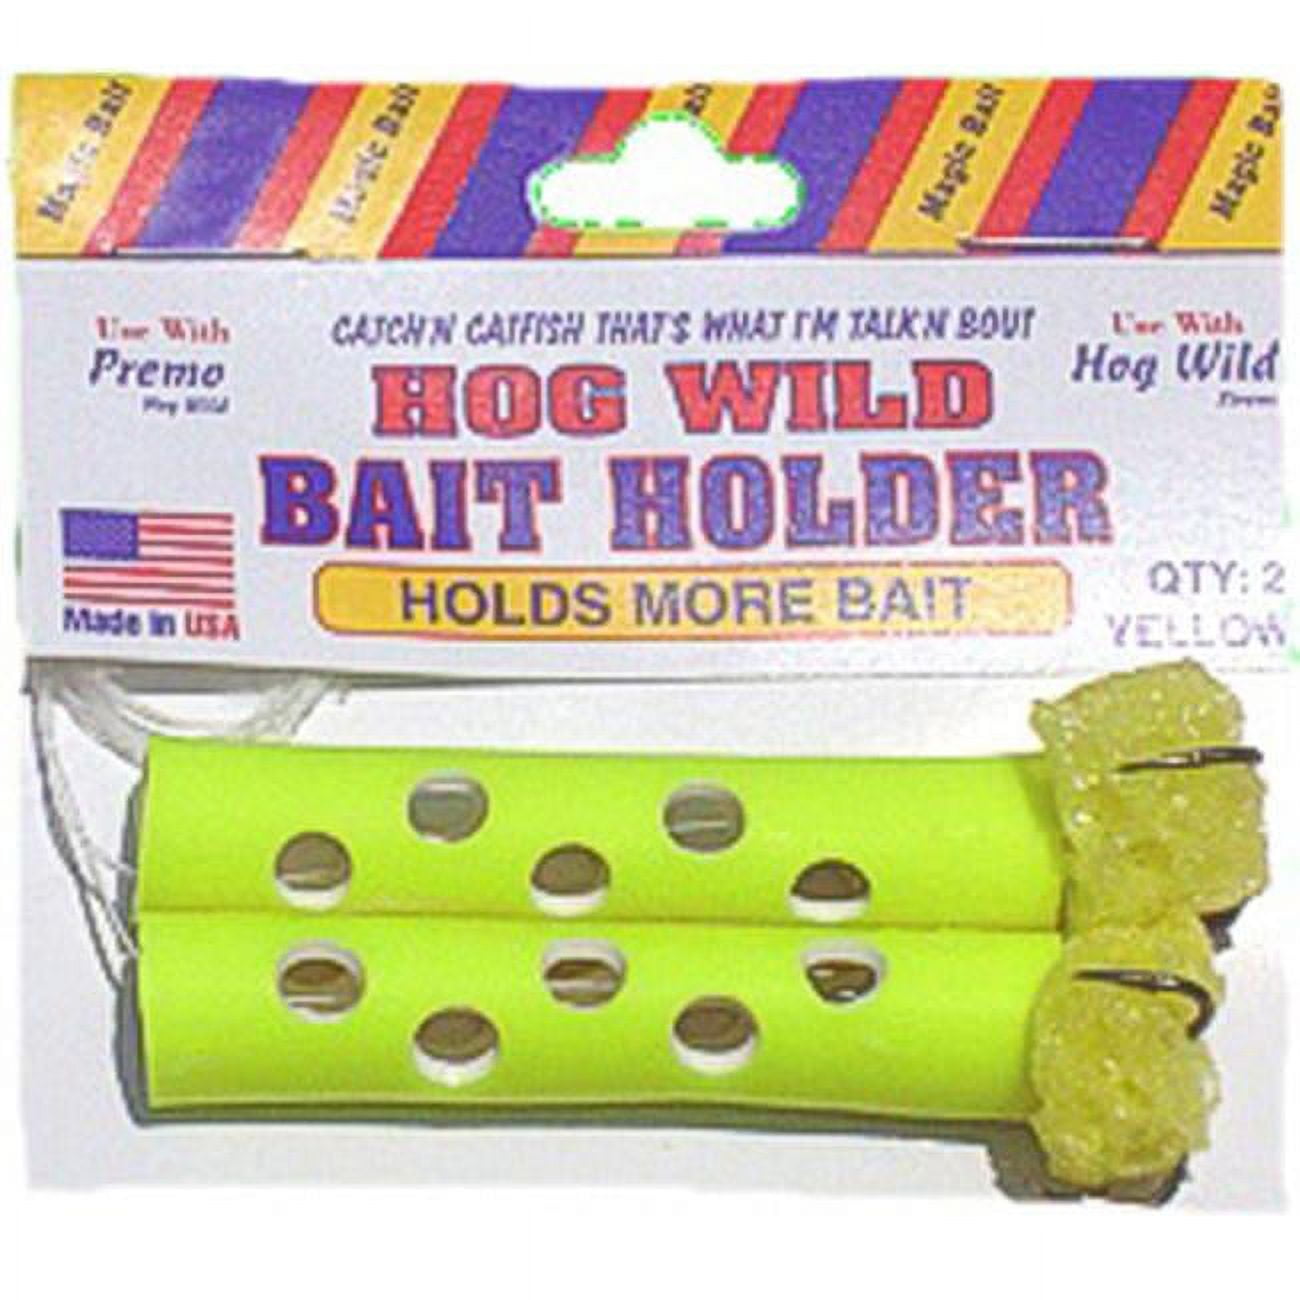 Magic Catfish Bait Hogwild Sponge Tube Bait Holder, Yellow - Pack of 2